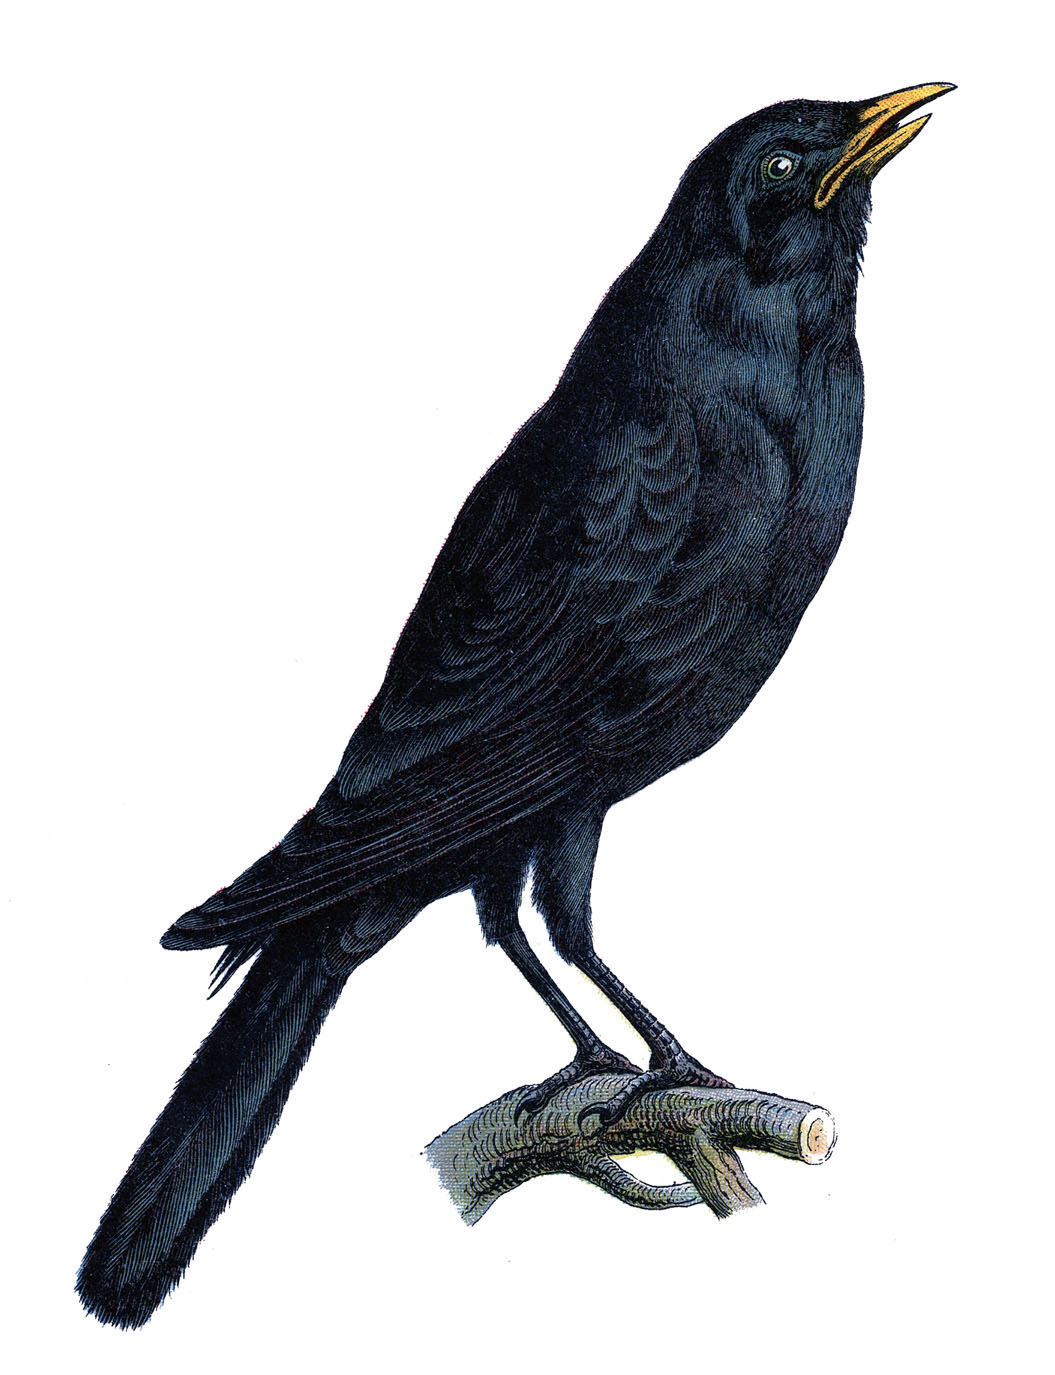 Picture #2570077 - crow clipart blackbird. crow clipart blackbird. 